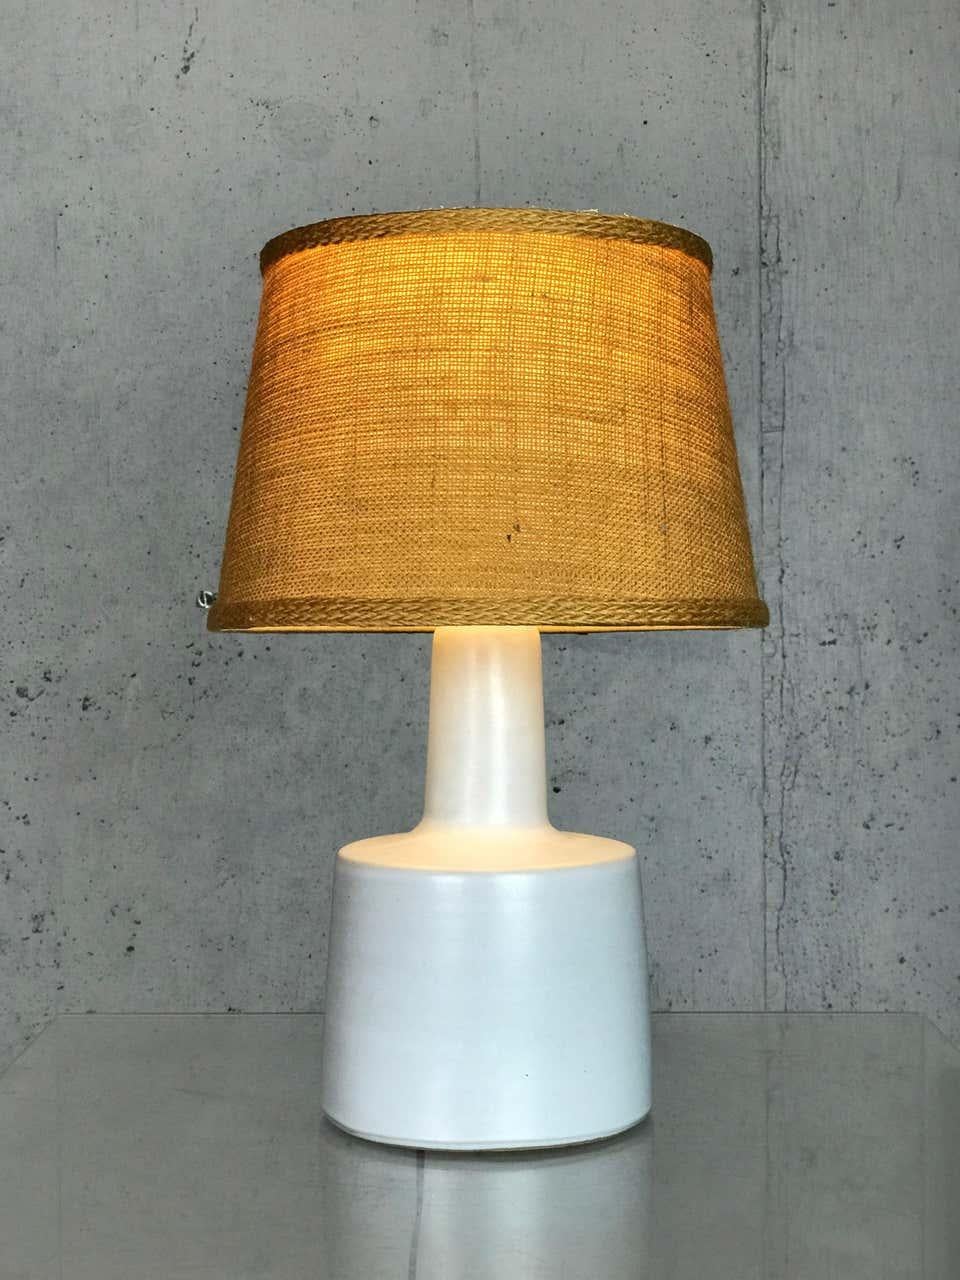 Ceramic Petite Table Lamp by Jane and Gordon Martz for Marshall Studios